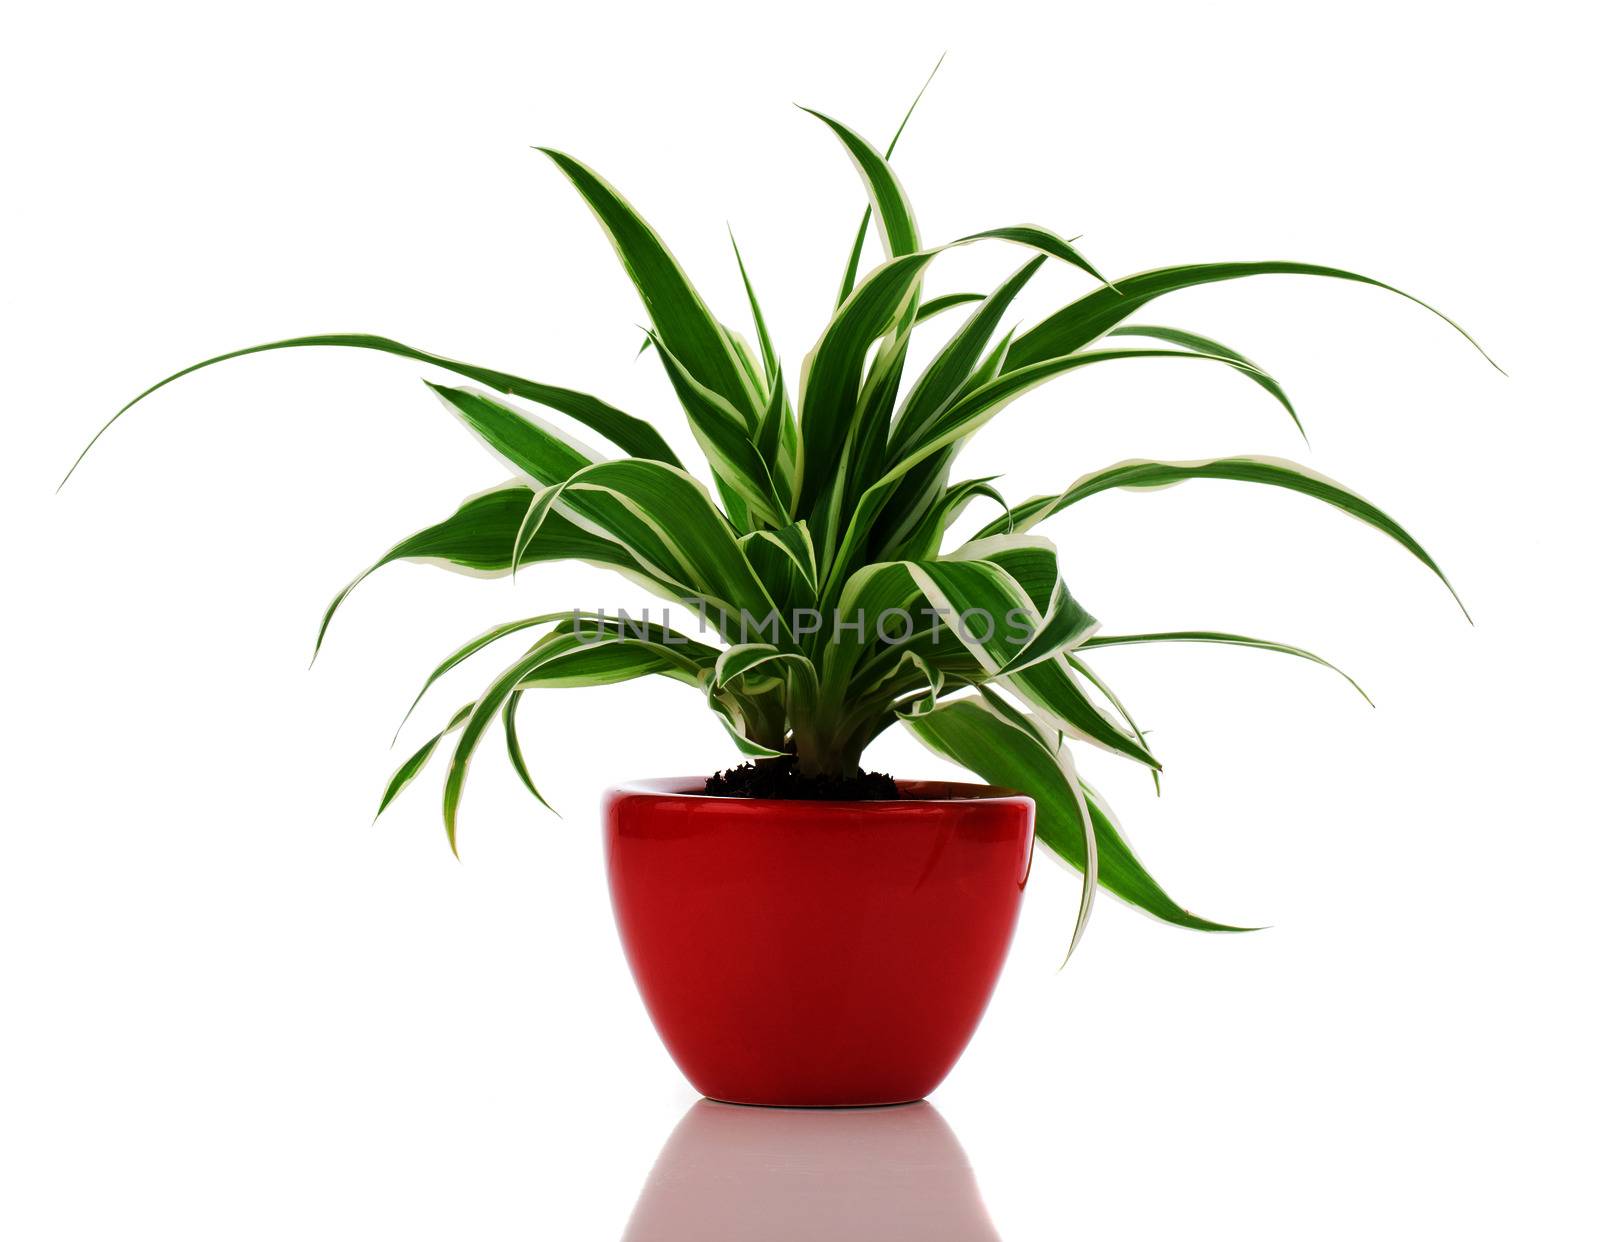 Chlorophytum plant in the red pot by motorolka